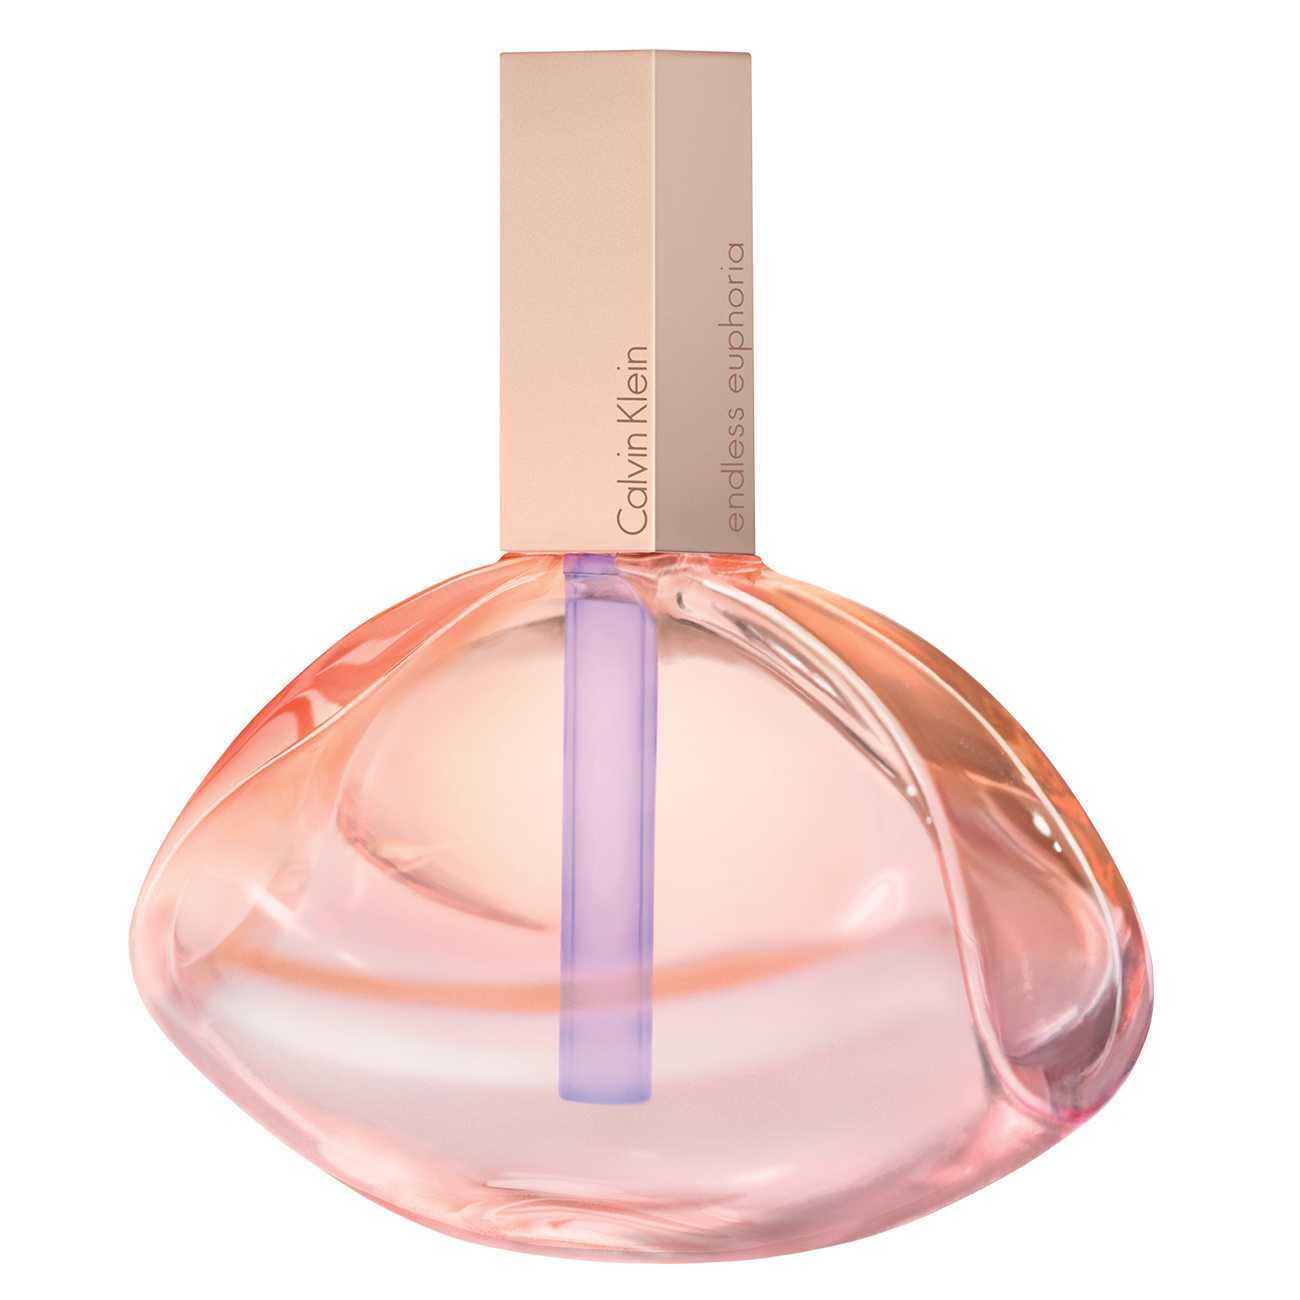 Apa de Parfum Calvin Klein ENDLESS EUPHORIA 75ml cu comanda online